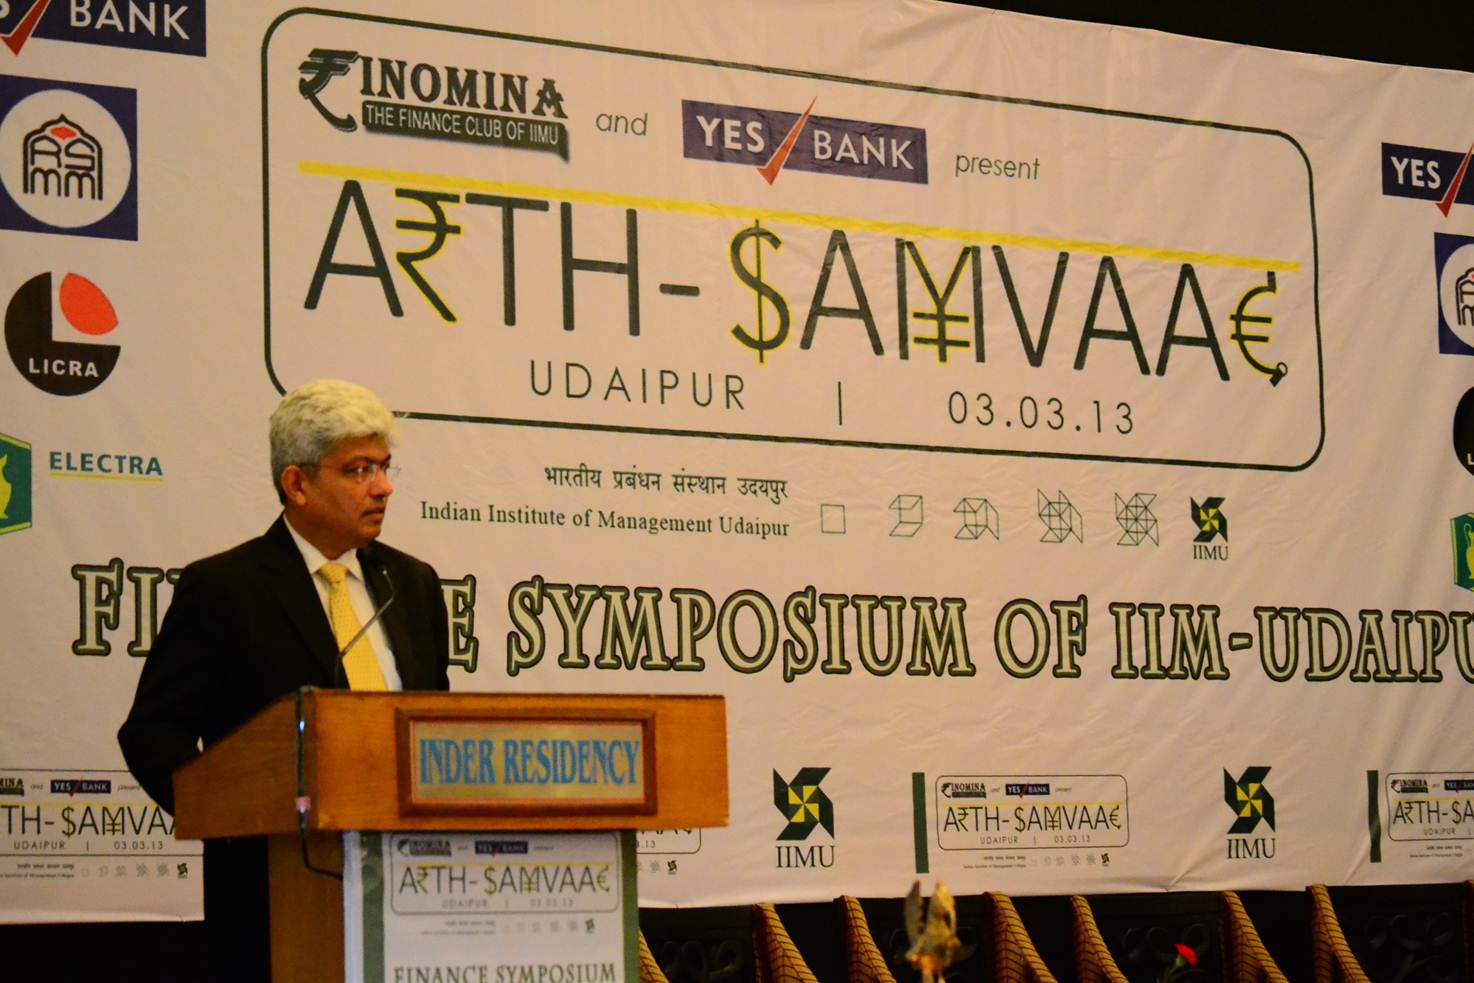 Mr. Nipun Mehta, delivering the Keynote address at Arth-Samvaad 2013